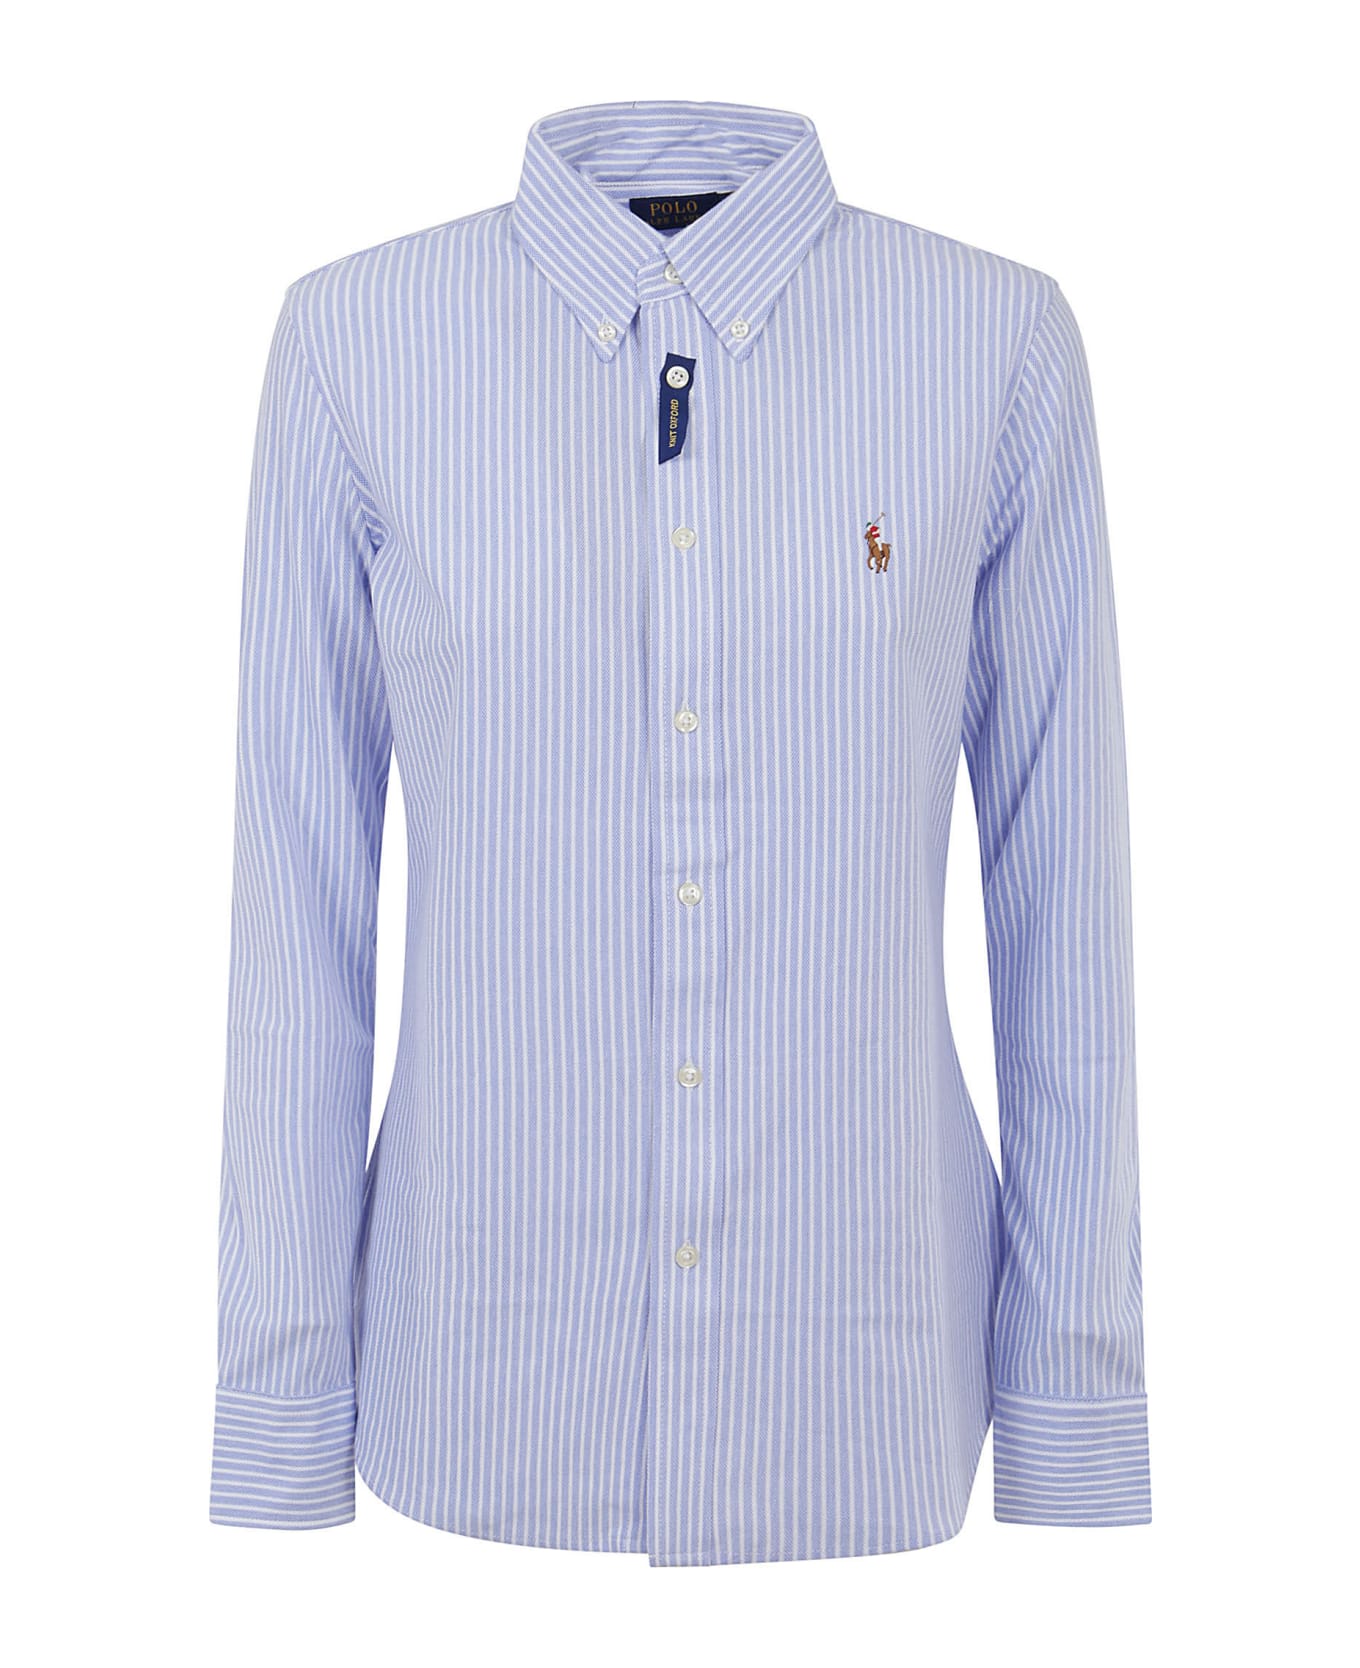 Ralph Lauren Striped Long-sleeve Shirt - Harbor Island Blue White